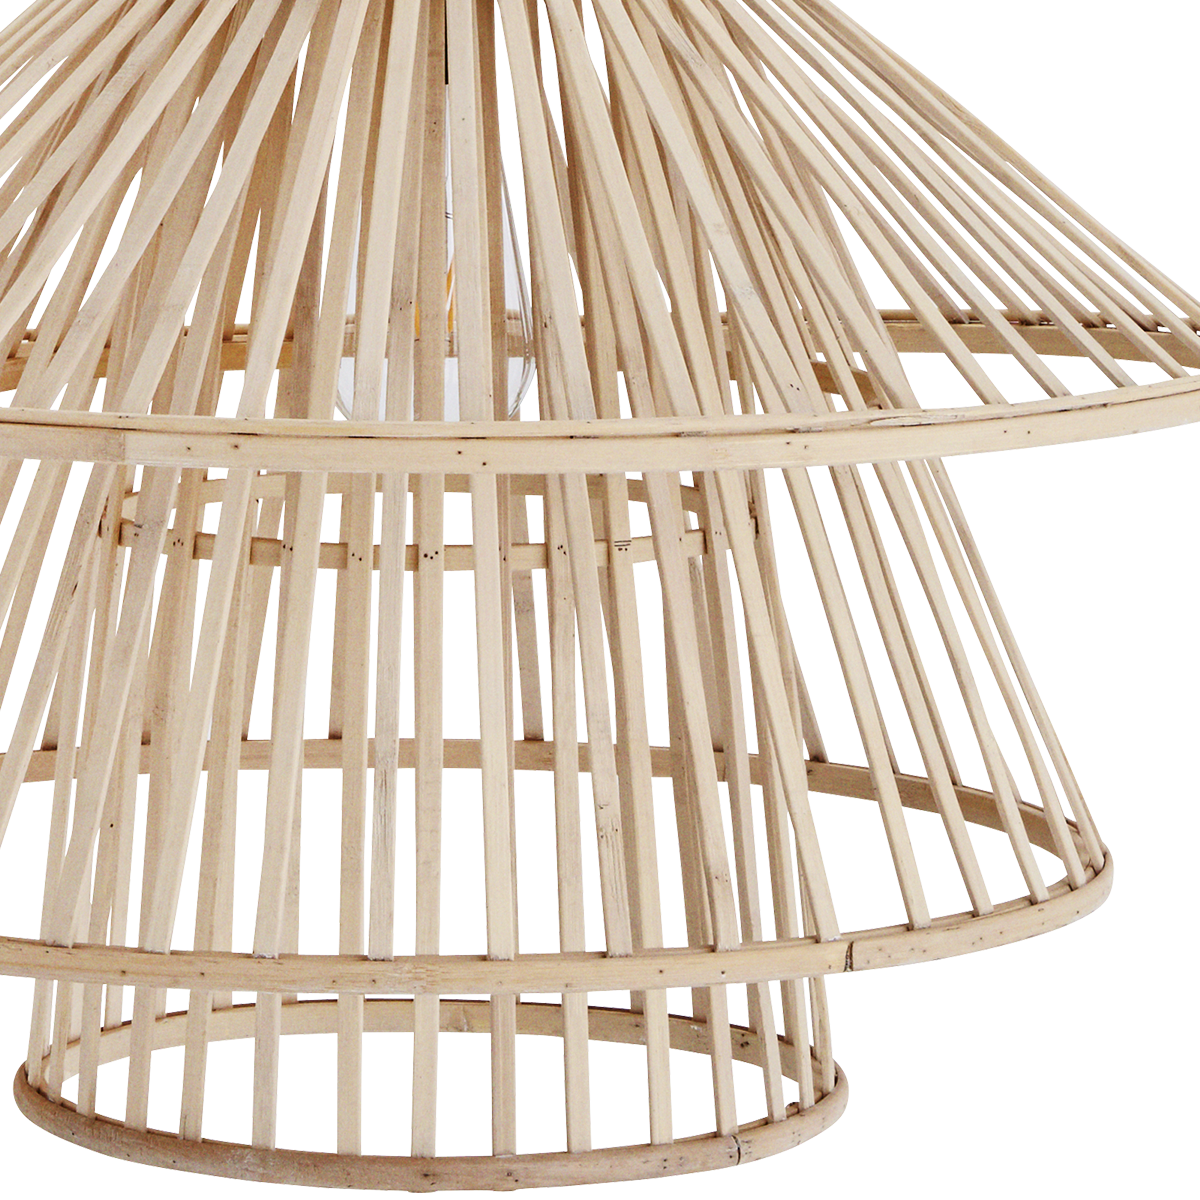 Bamboo ceiling lamp 